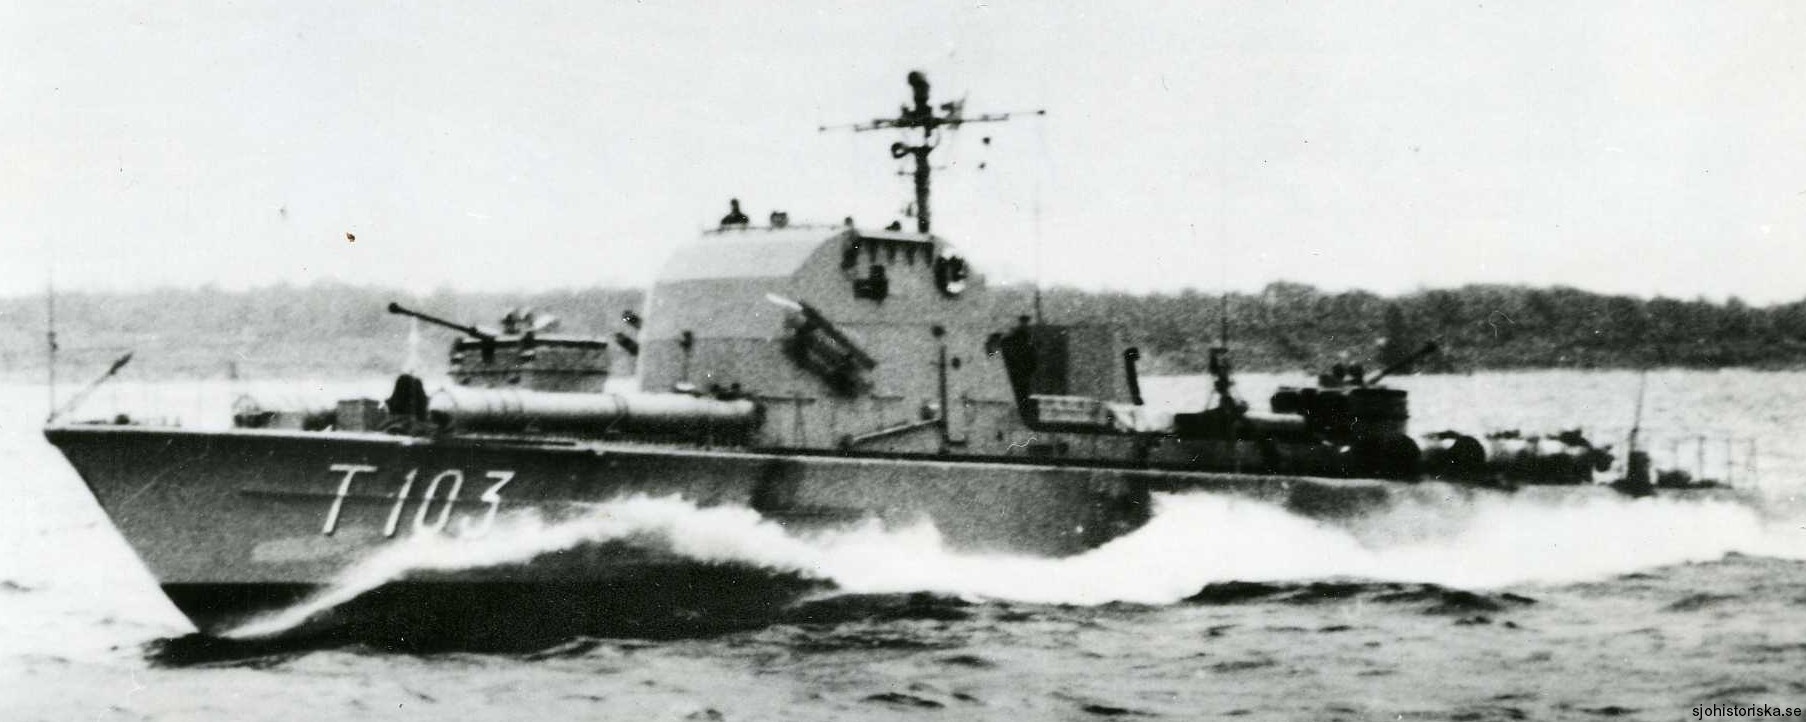 t103 polaris hms hswms plejad class fast attack craft torpedo boat vessel swedish navy svenska marinen 07